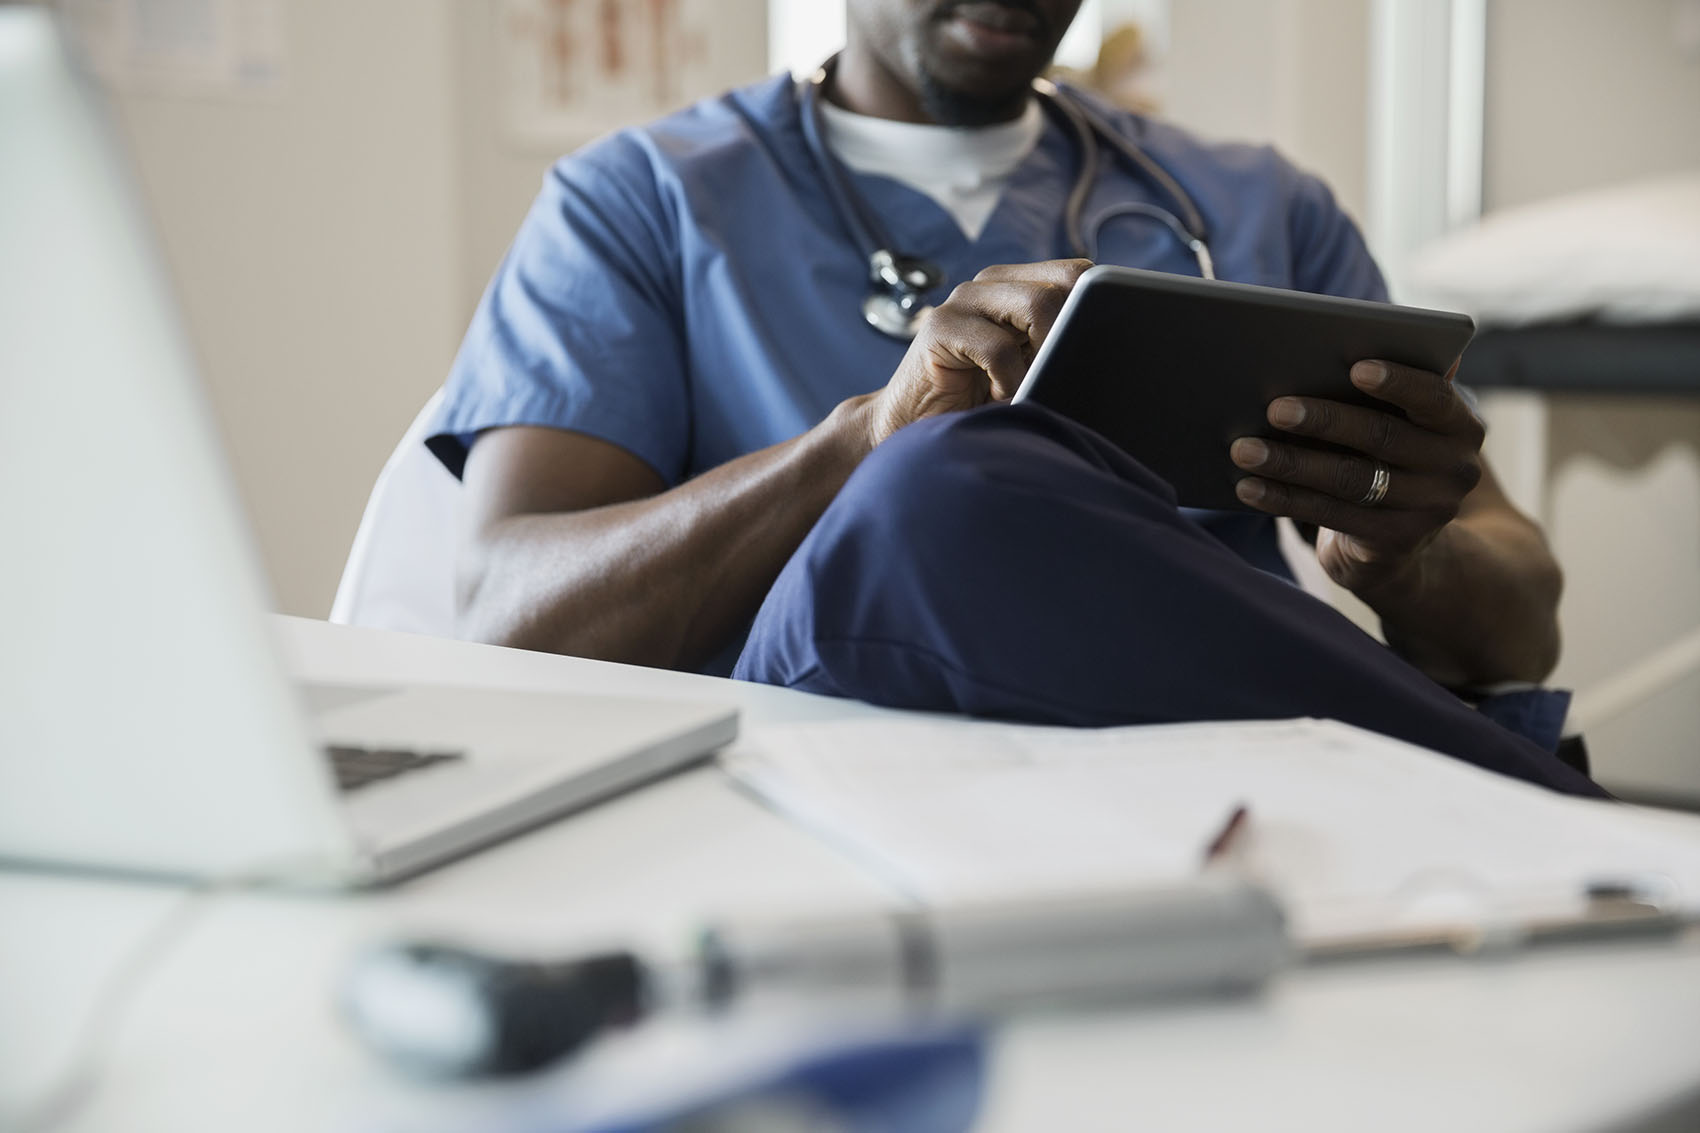 Doctor in scrubs using digital tablet in clinic